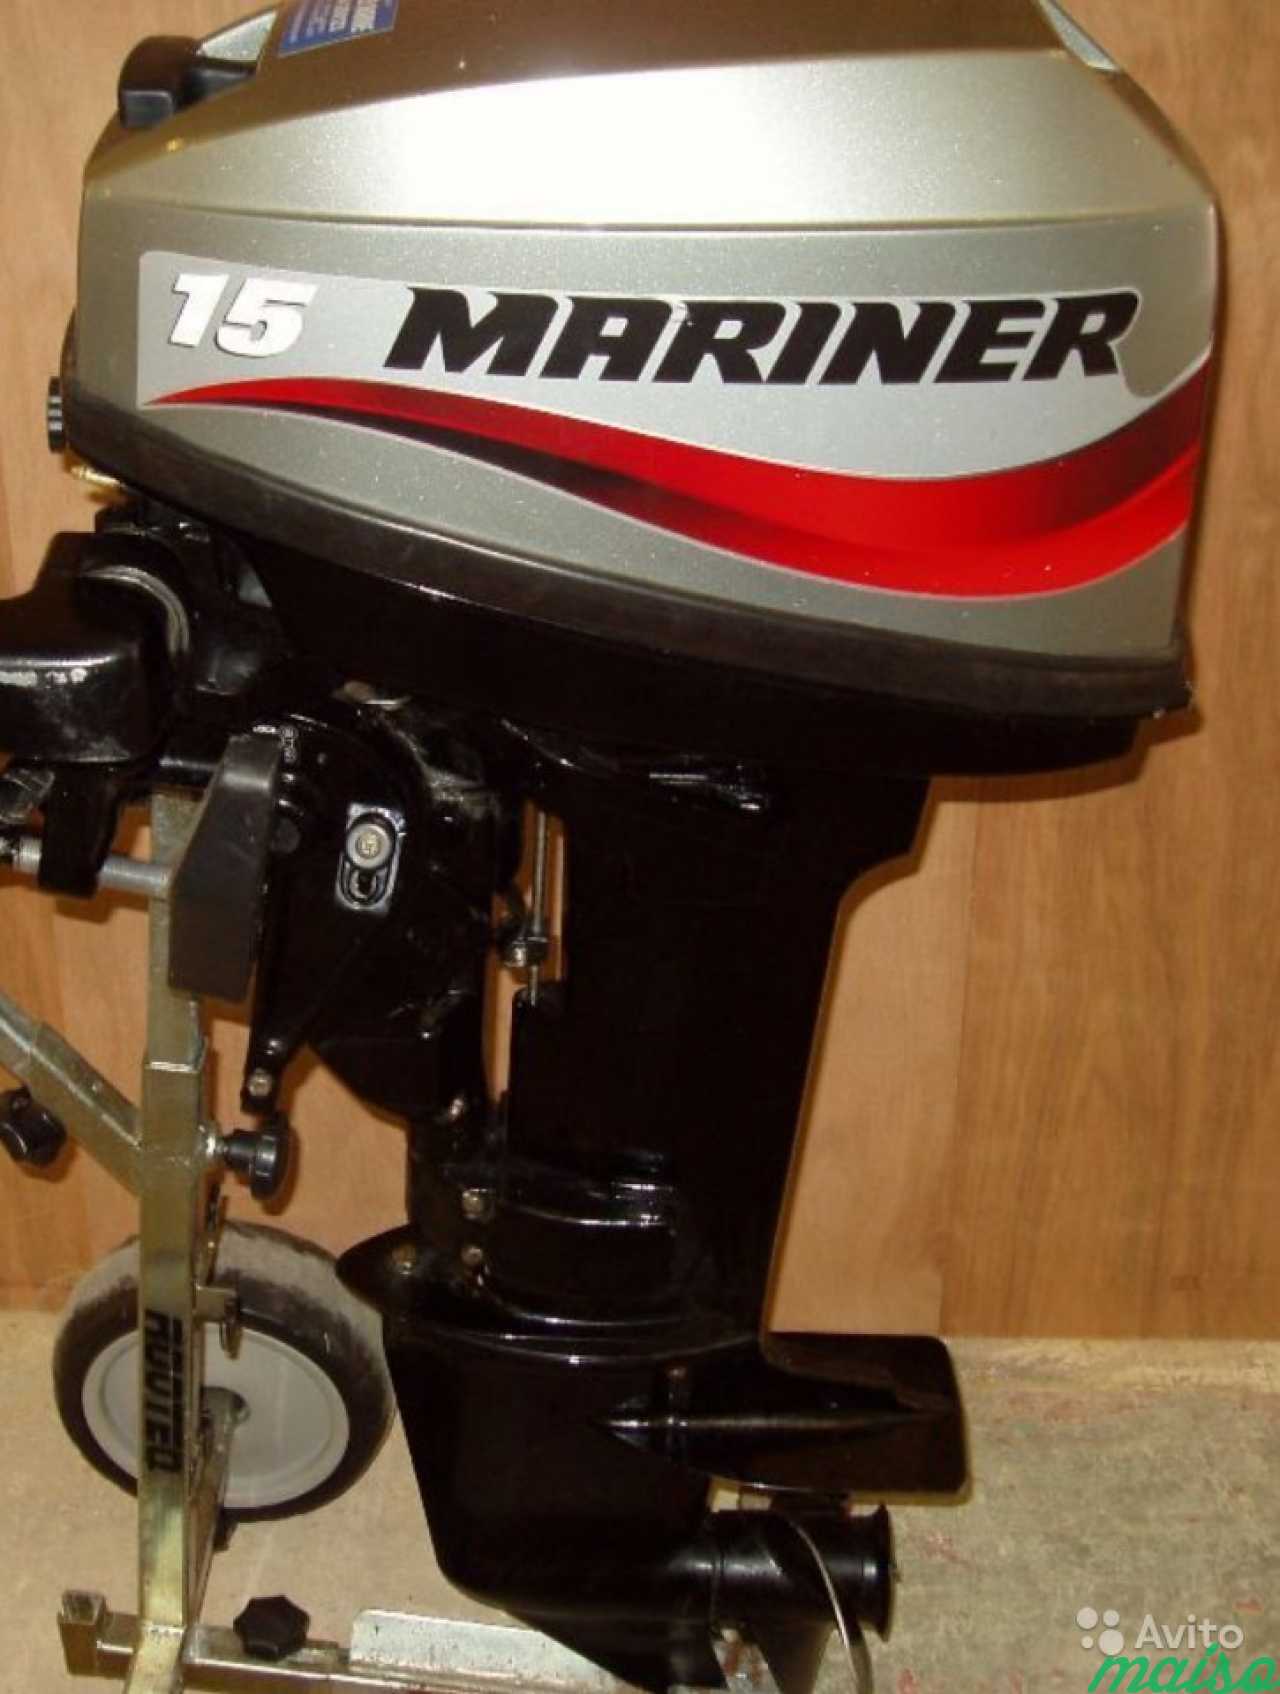 Купить лодочный меркурий на авито. Mariner Лодочный мотор 15 л.с. Mariner 15 four stroke. Двигатель Лодочный Маринер 15. Маринер 8 10 15.